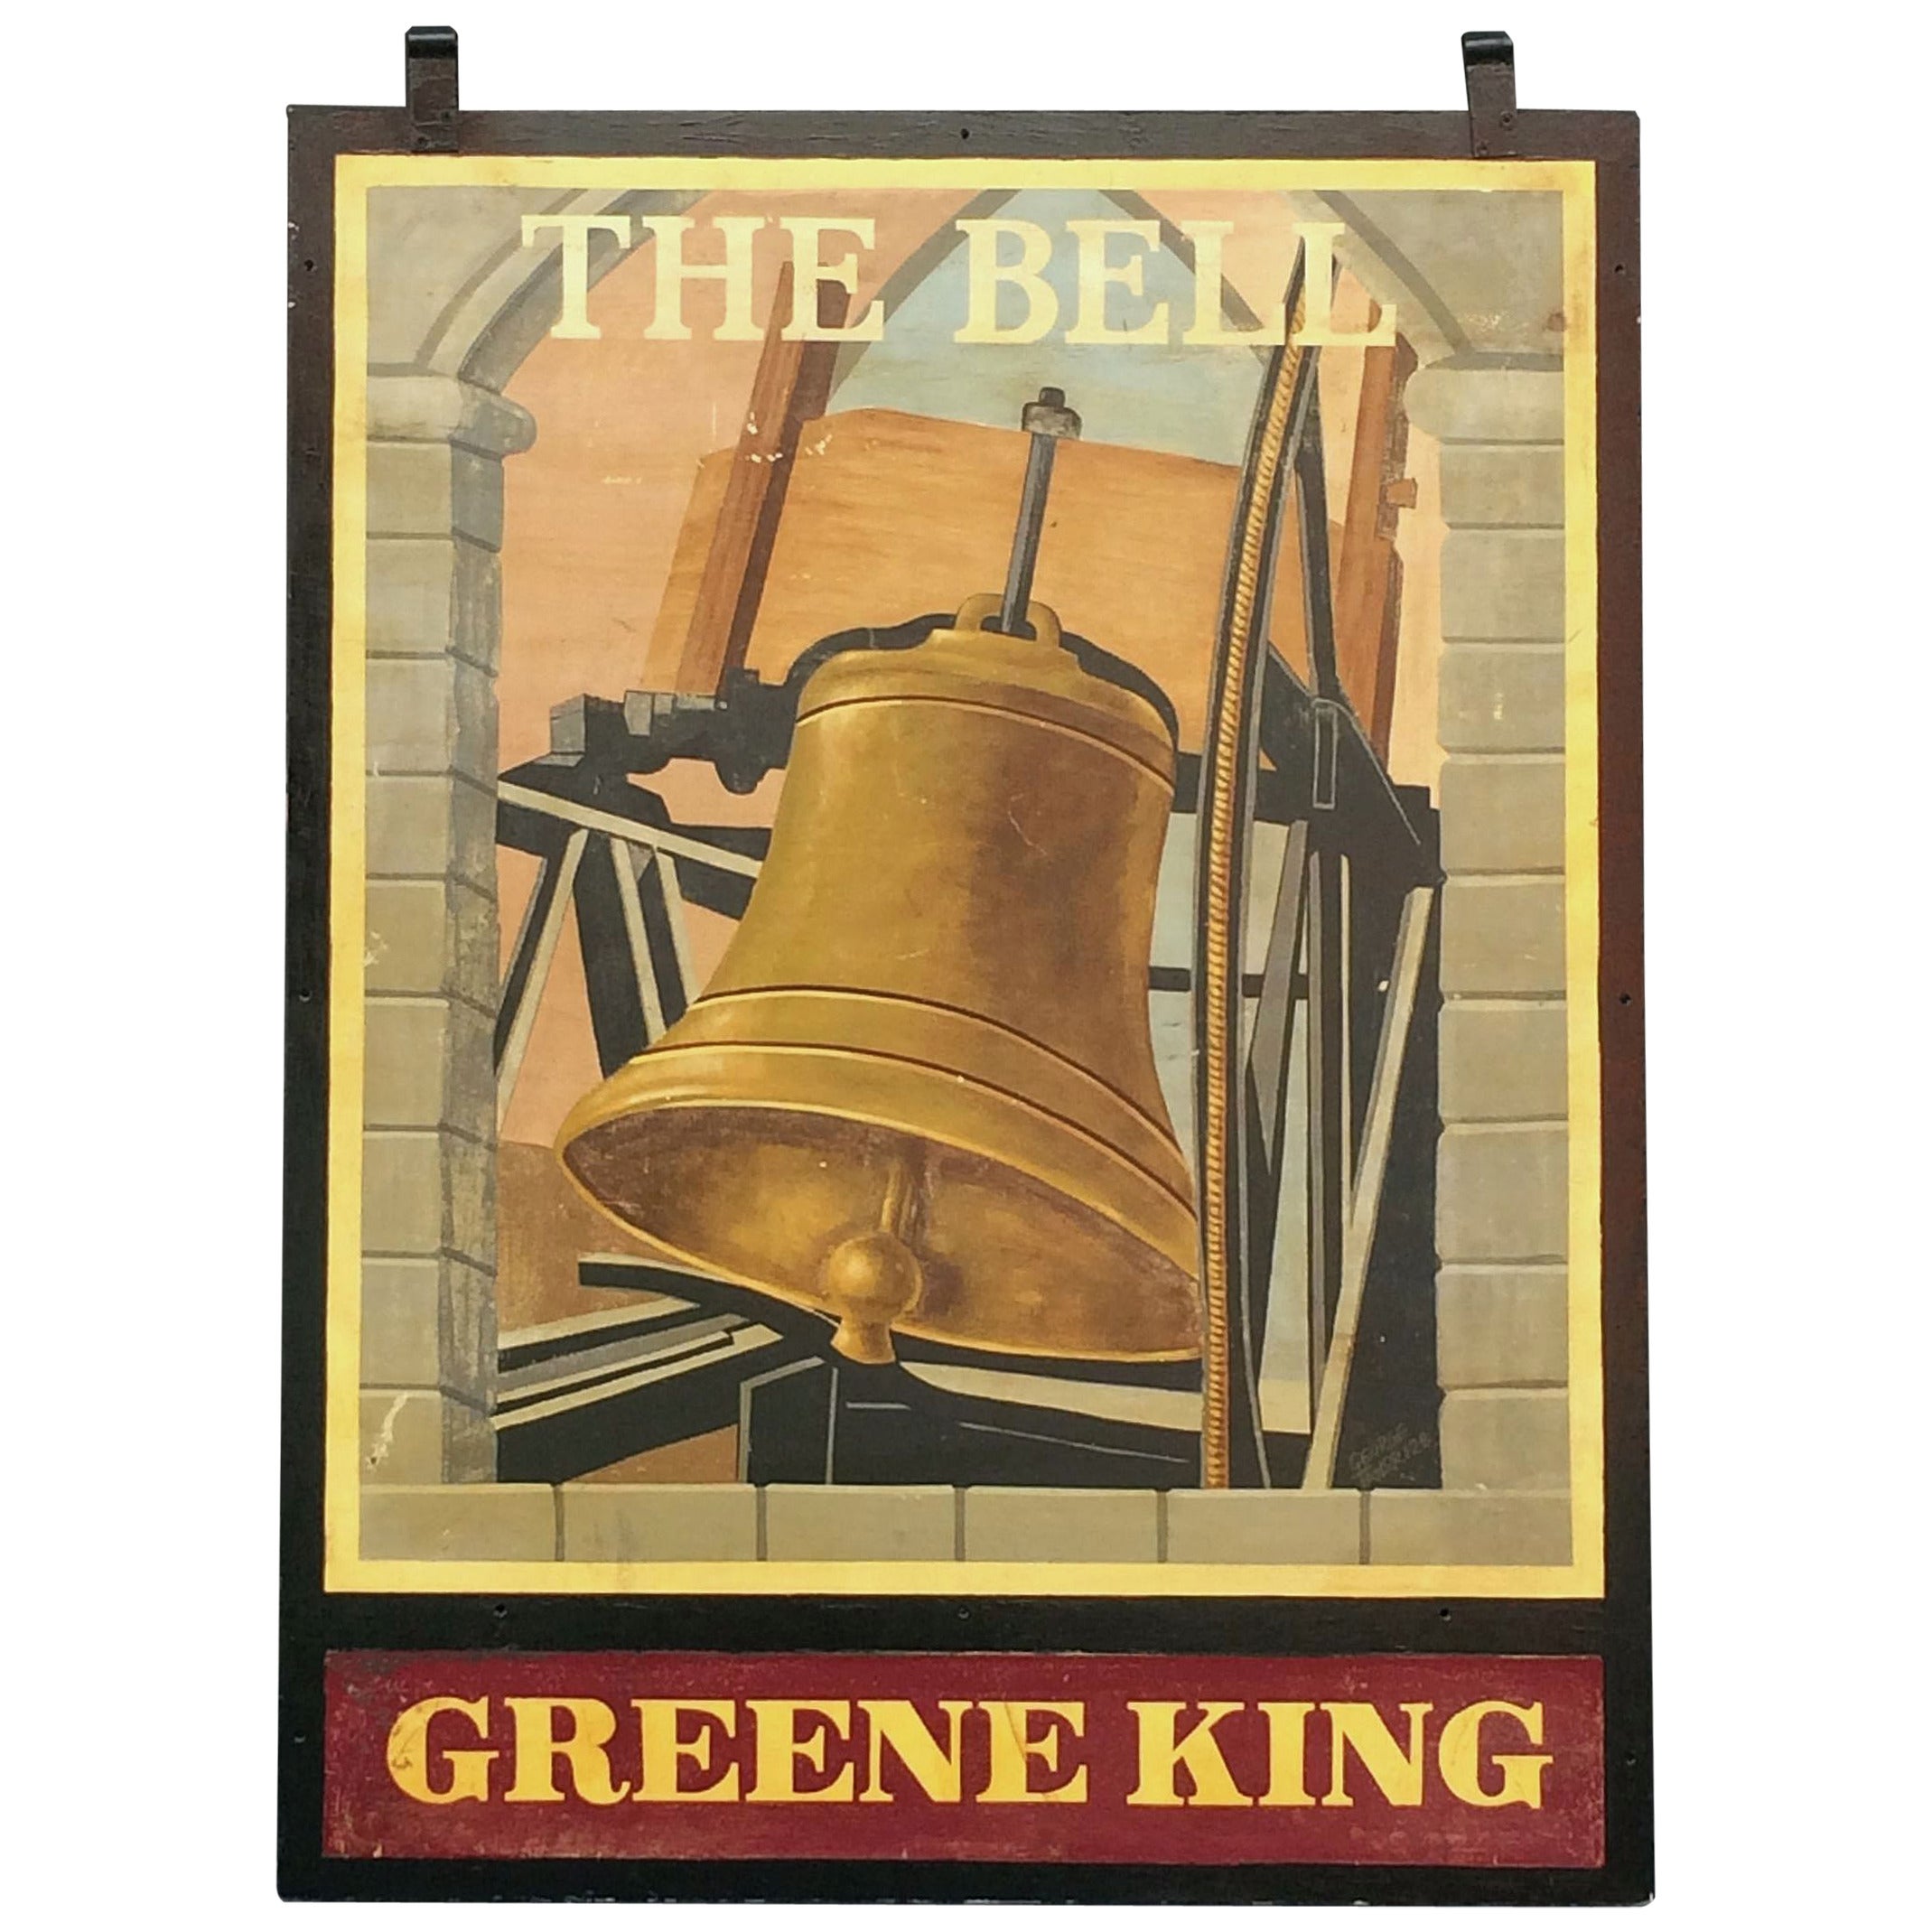 English Pub Sign, "The Bell, Greene King"